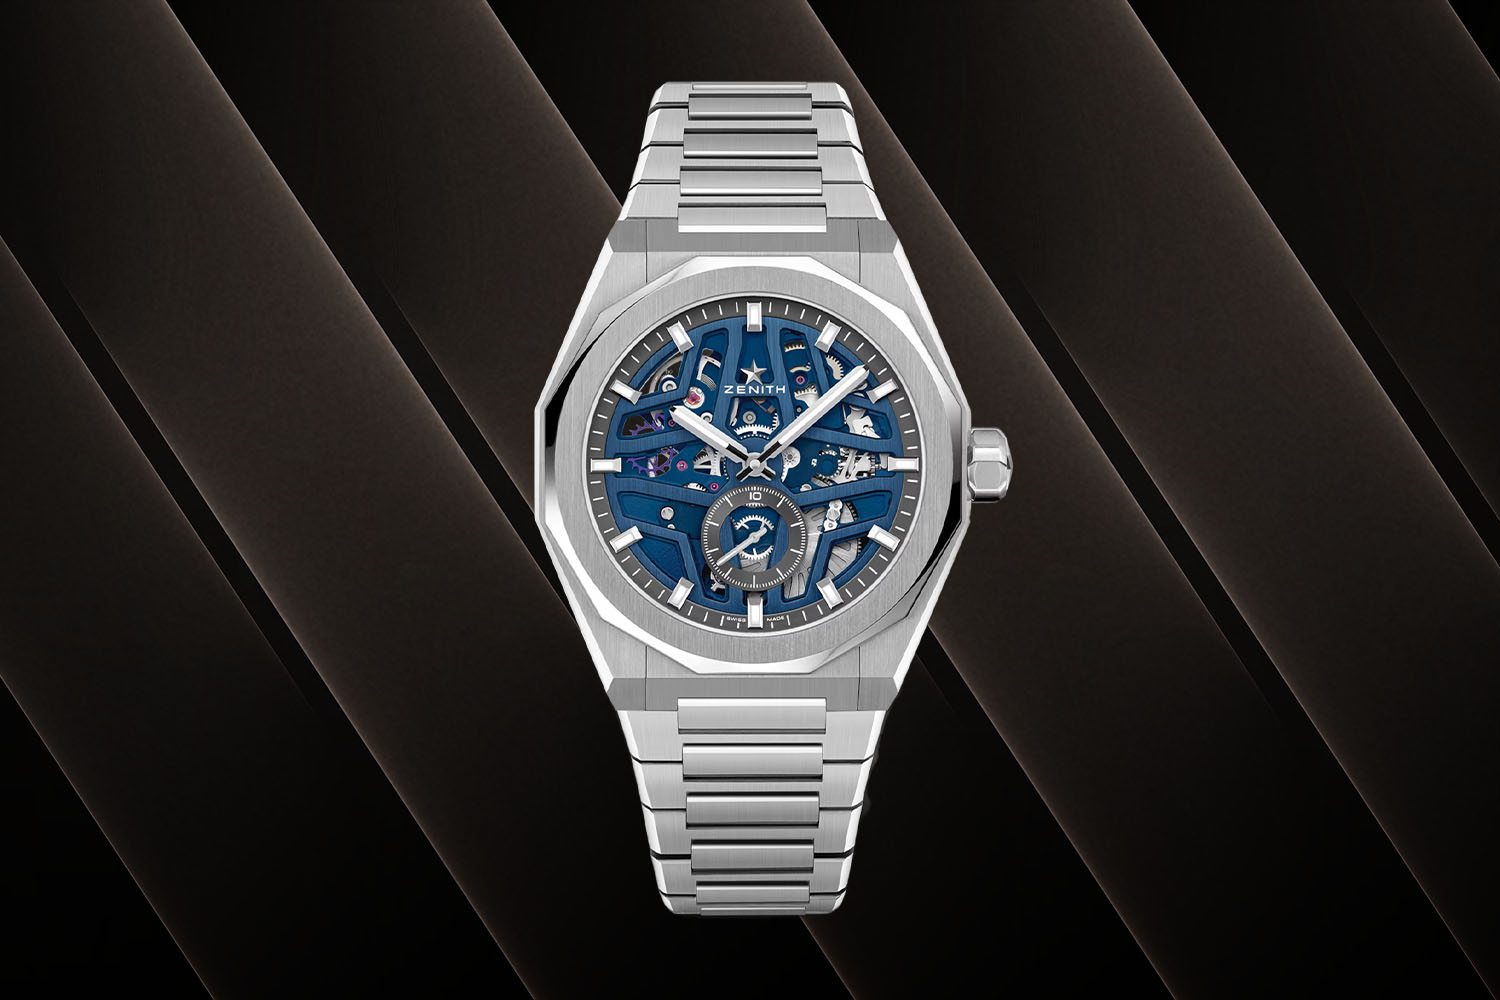 Zenith Defy Skyline Skeleton is one of the best luxury sports watches